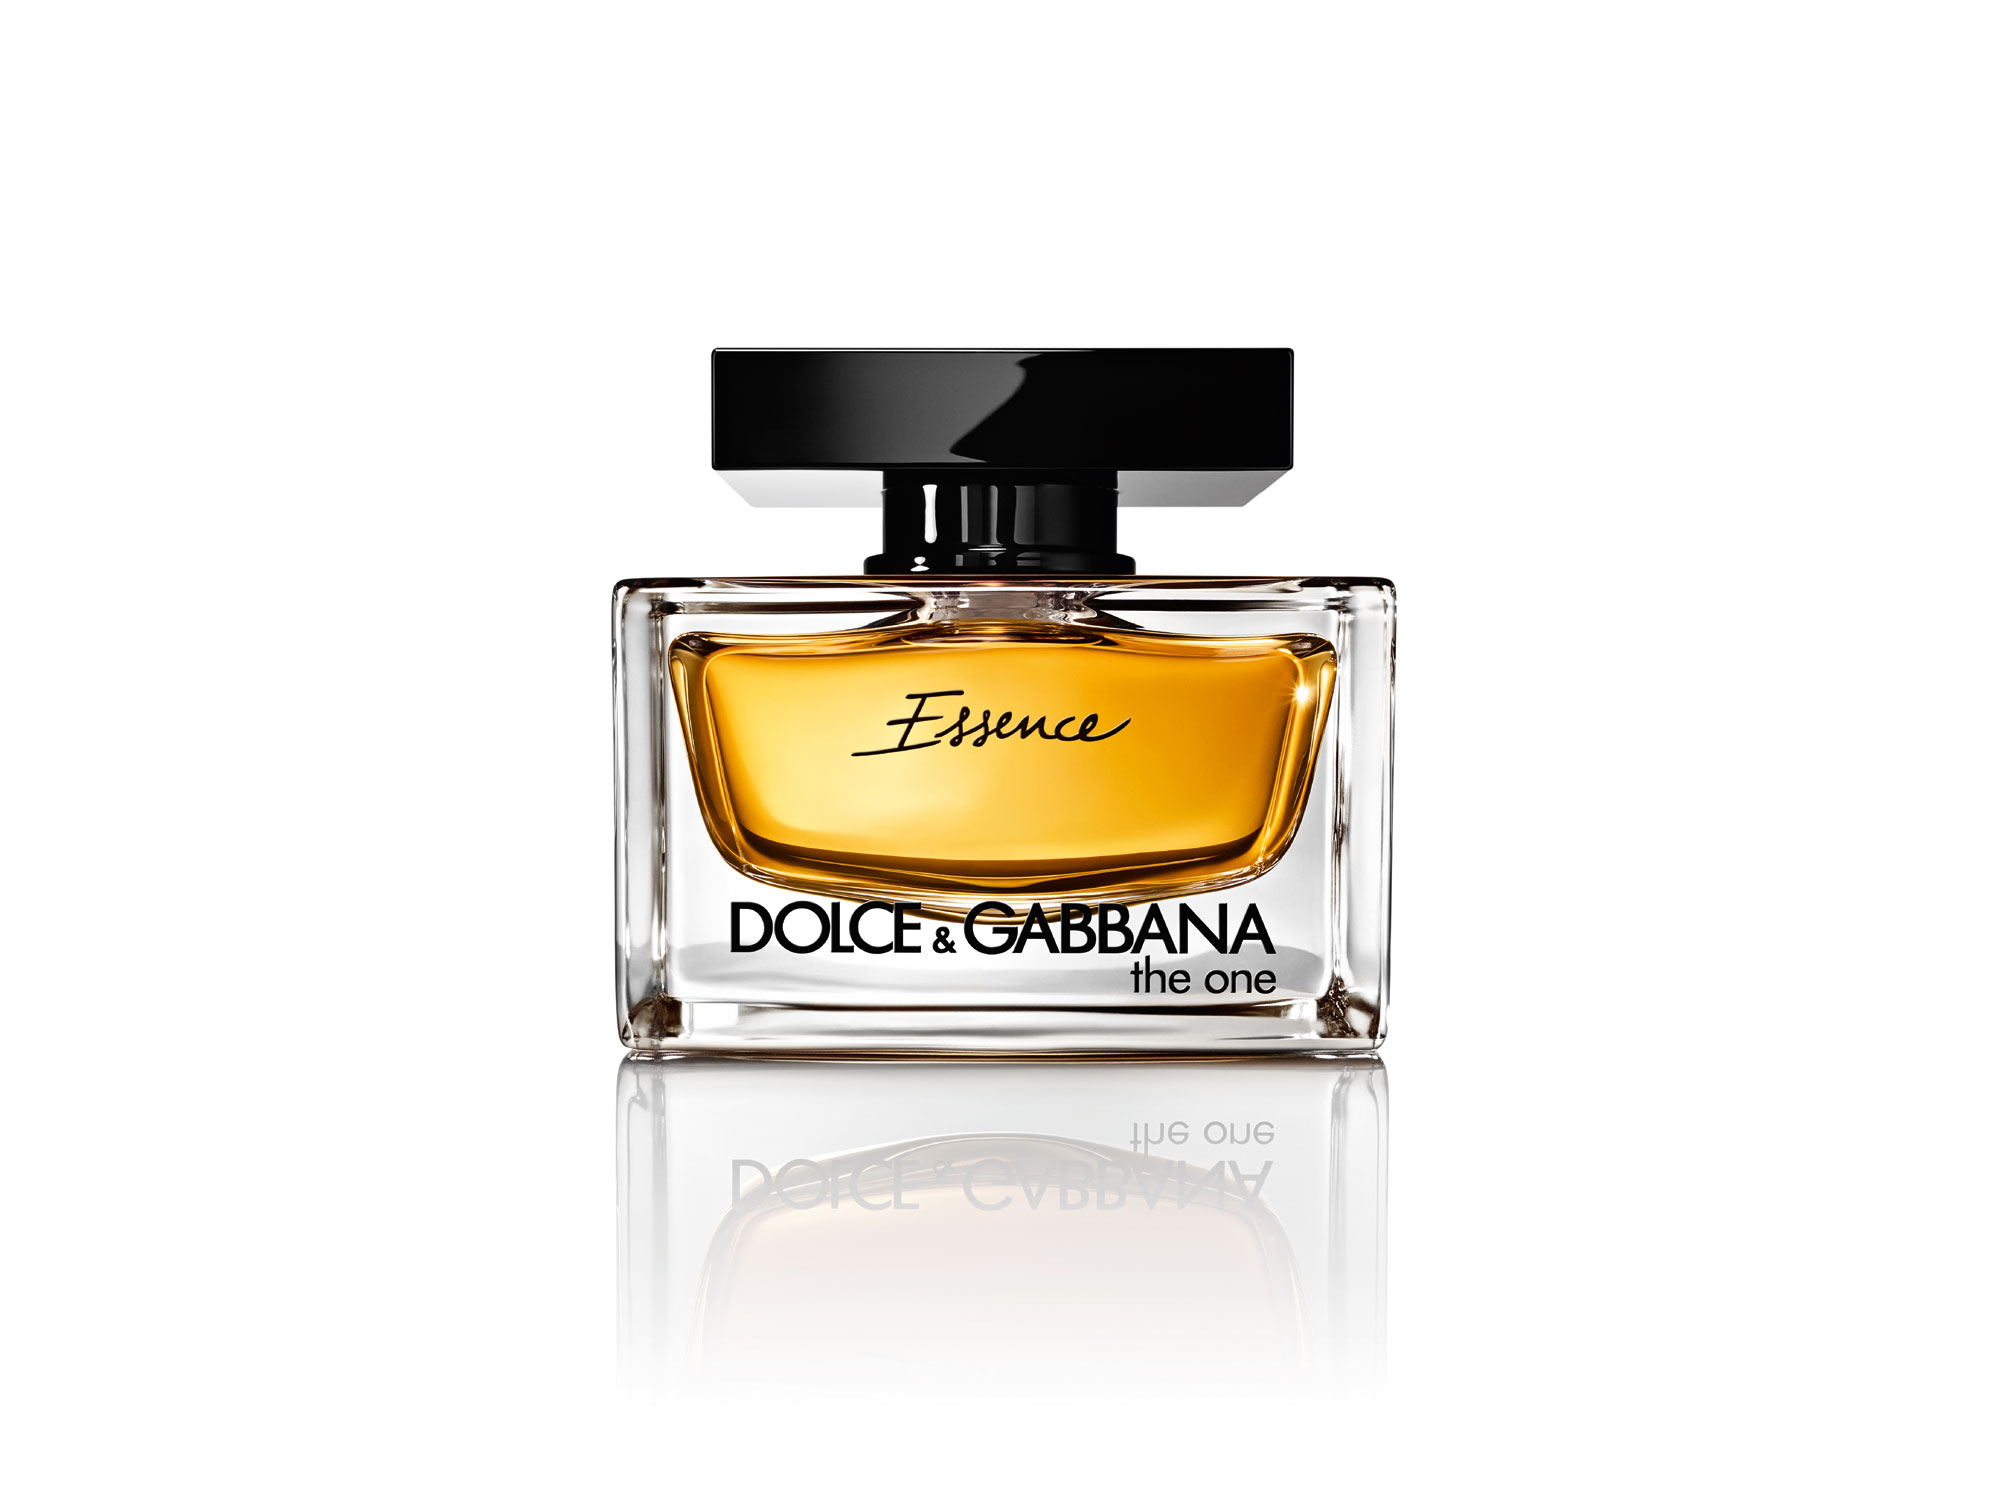 Dolce & Gabbana, The One Essence.